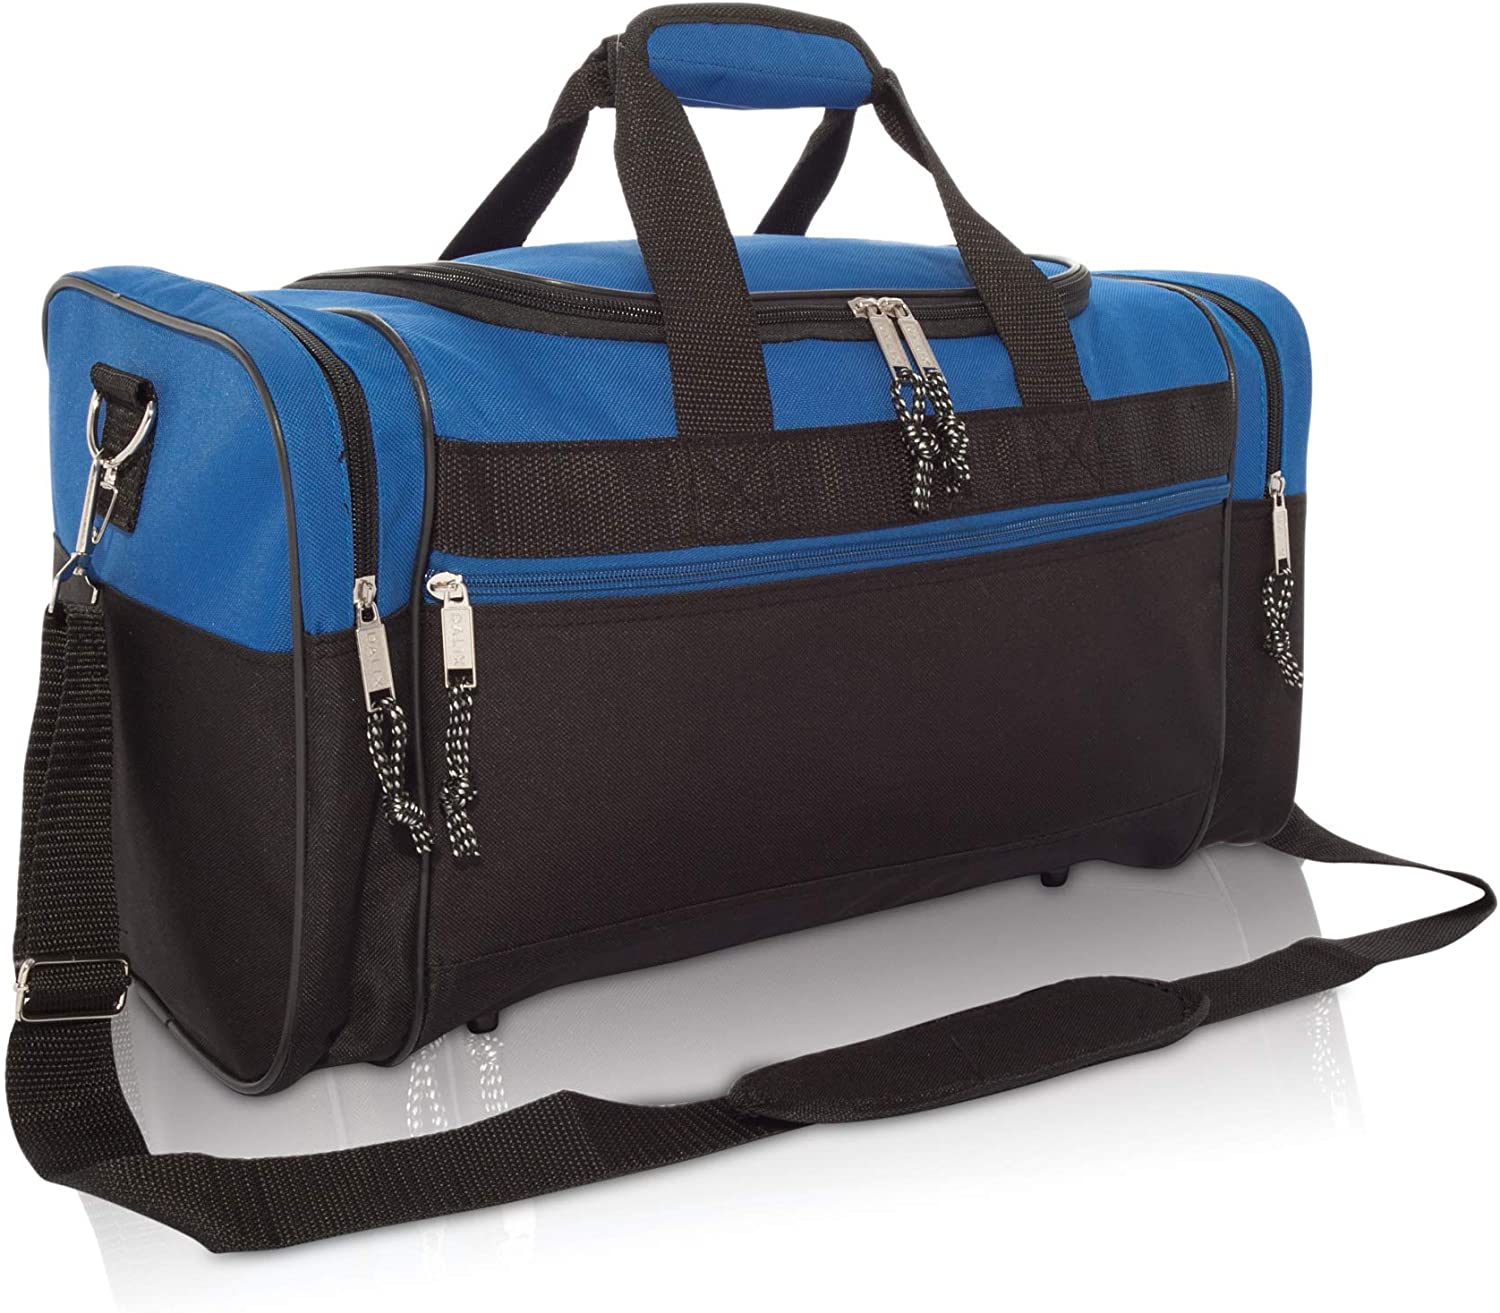 Blank Duffle Bag Duffel Bag in Black and Royal Gym Bag, Royal Blue ...